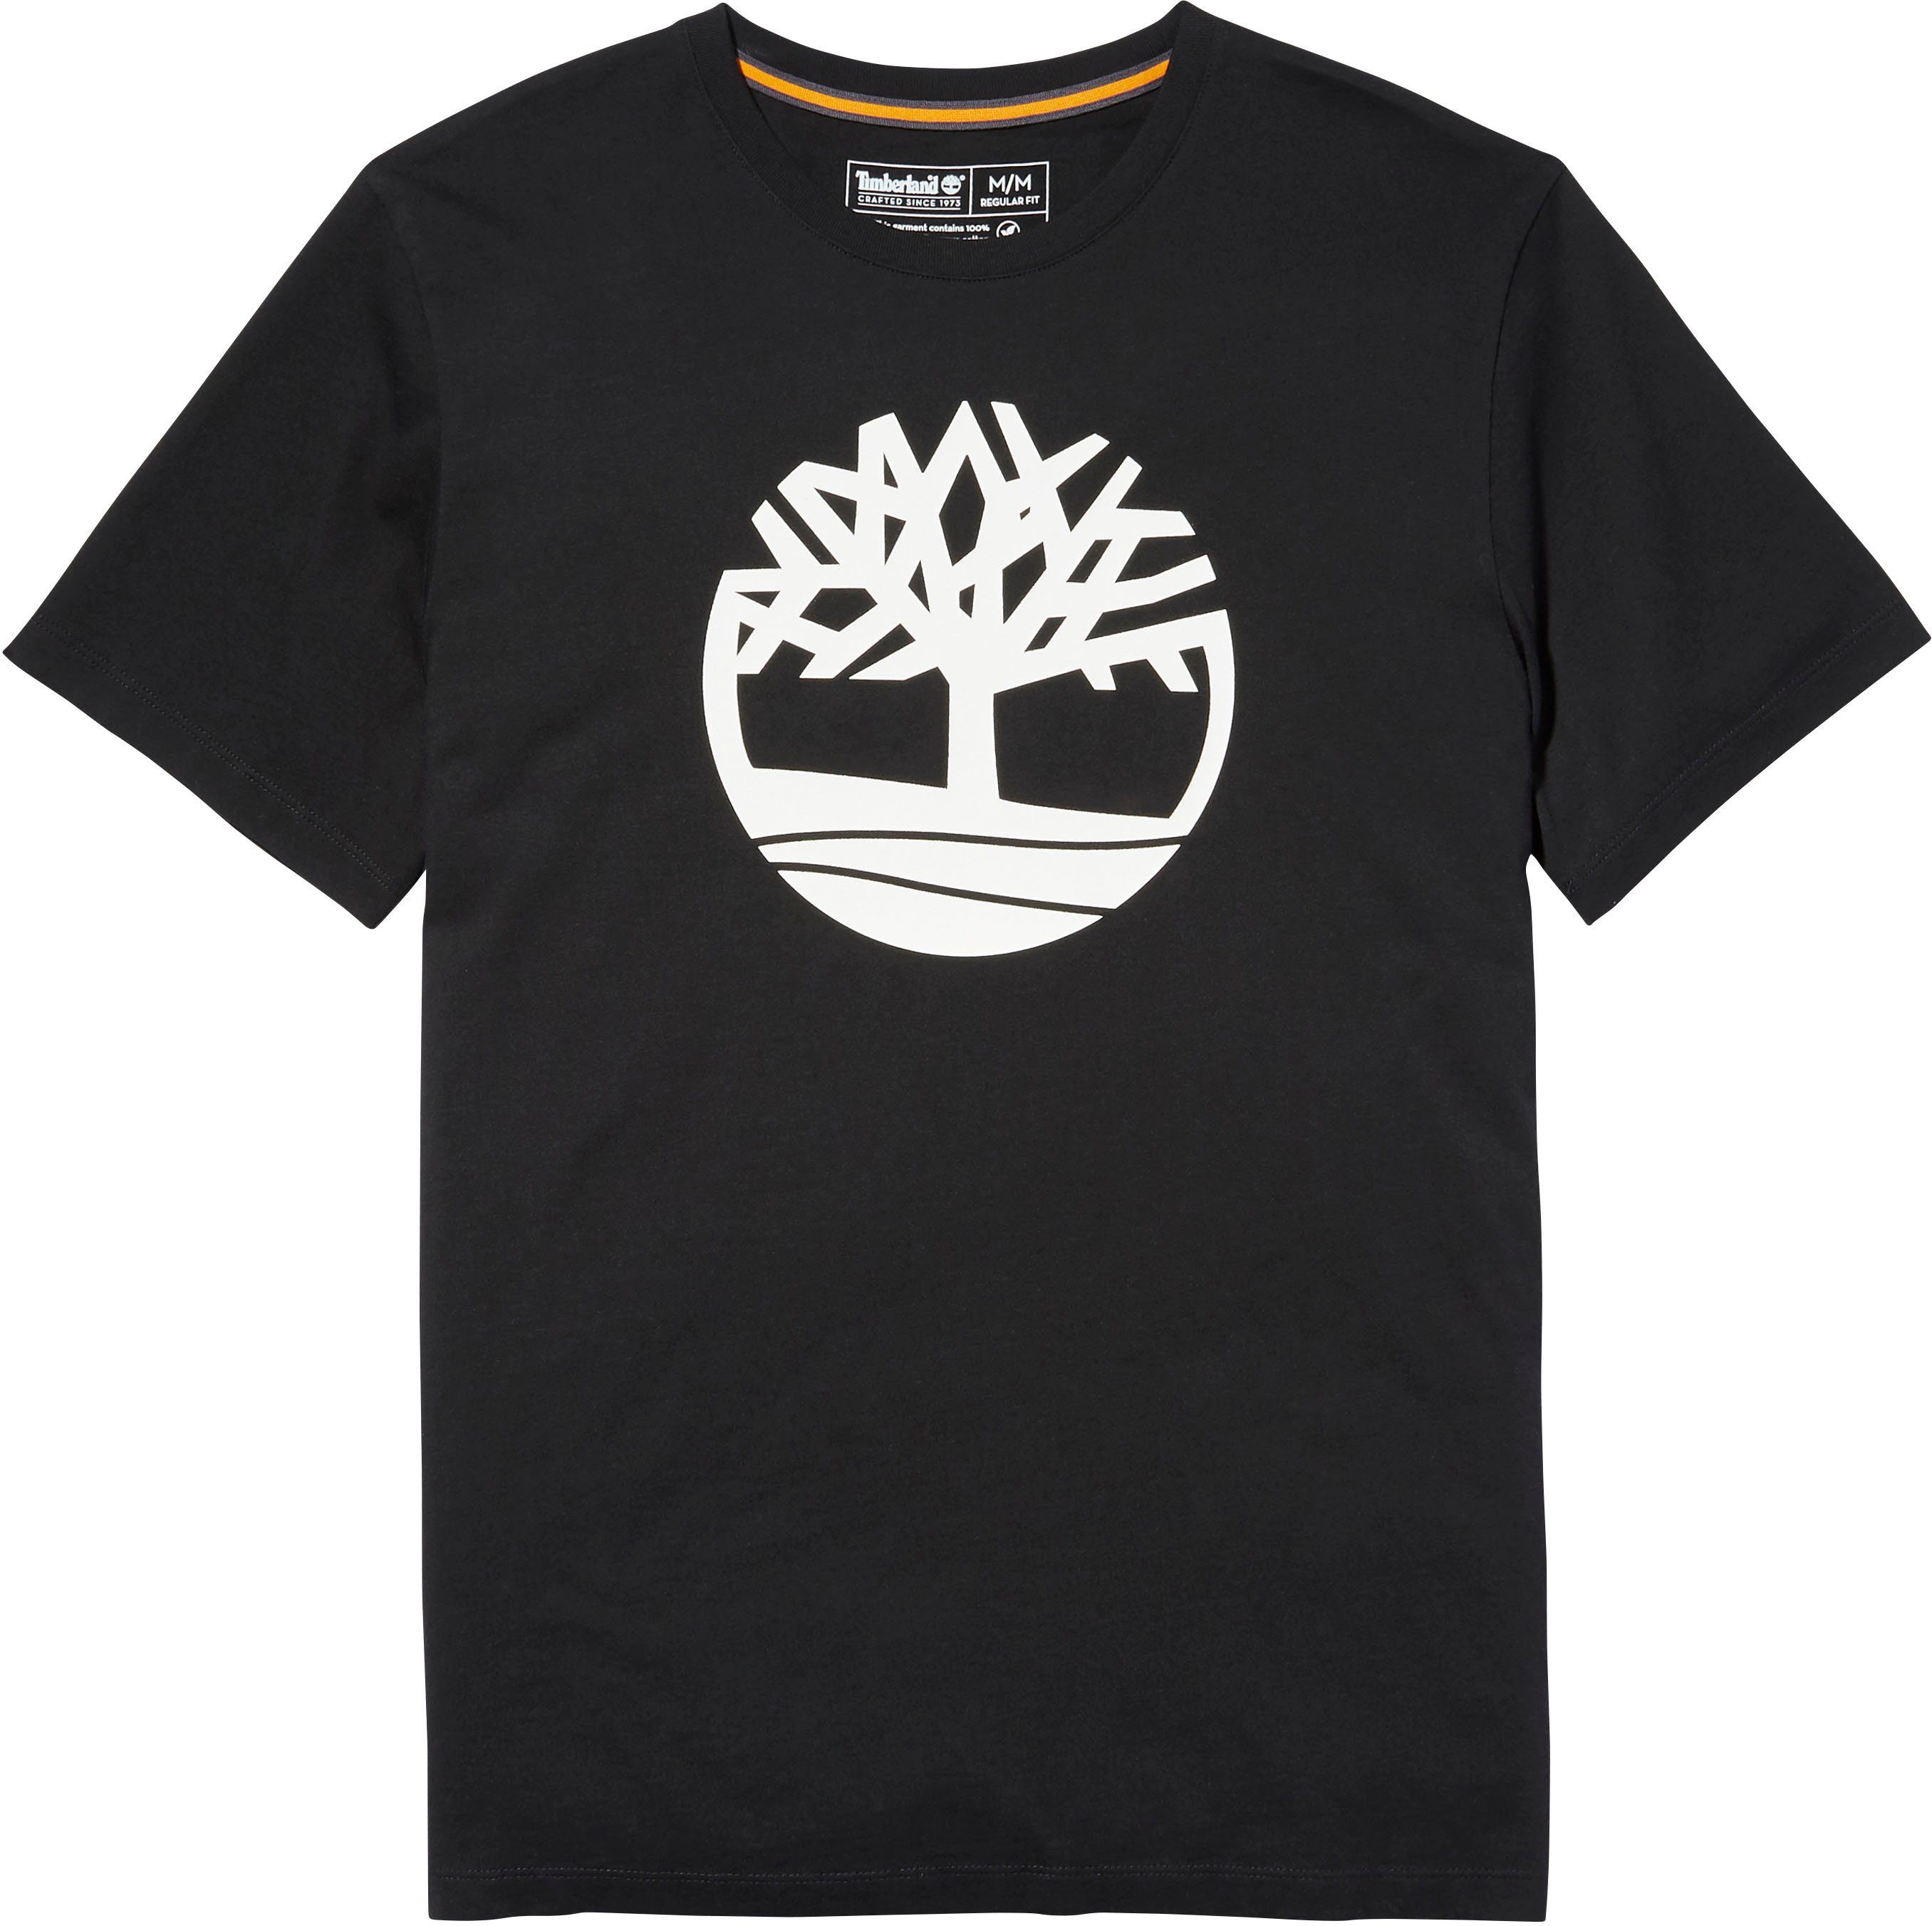 Timberland T-Shirt Kennebec schwarz River Tree